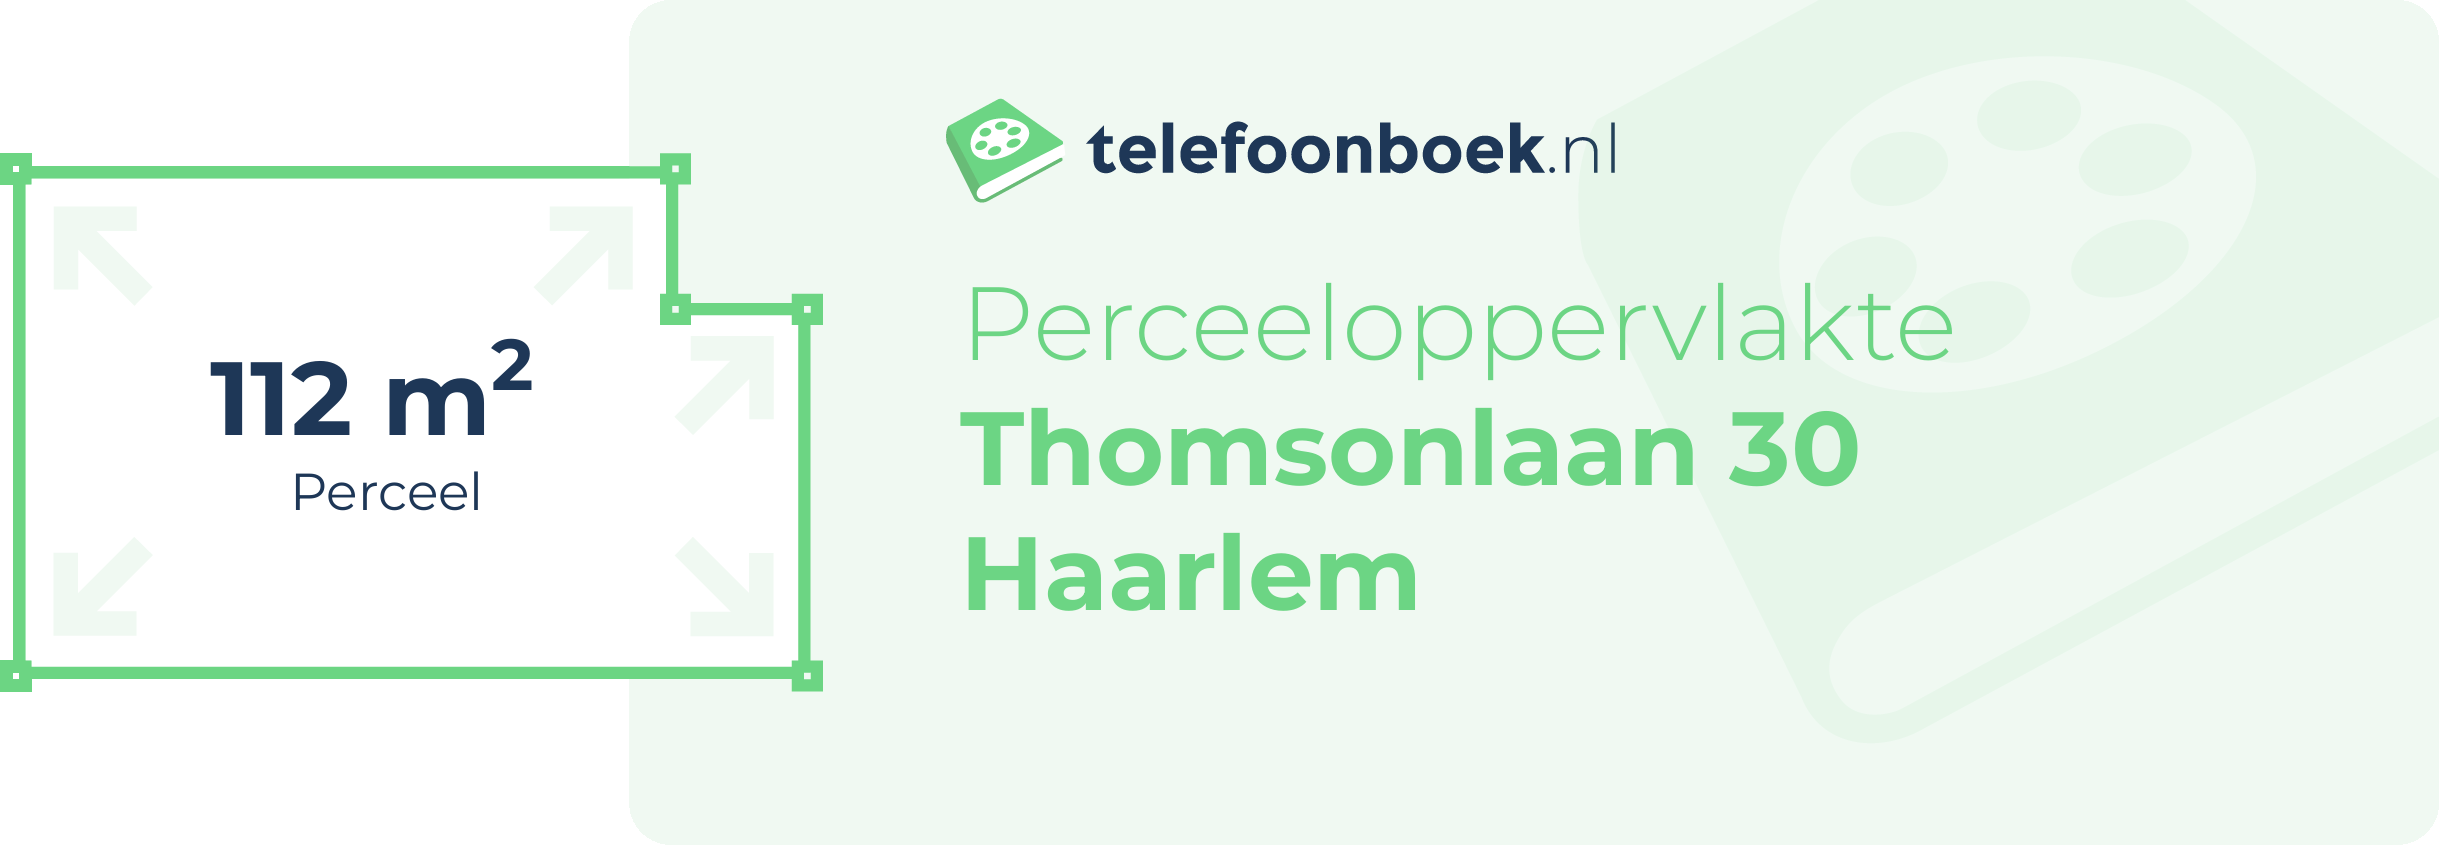 Perceeloppervlakte Thomsonlaan 30 Haarlem